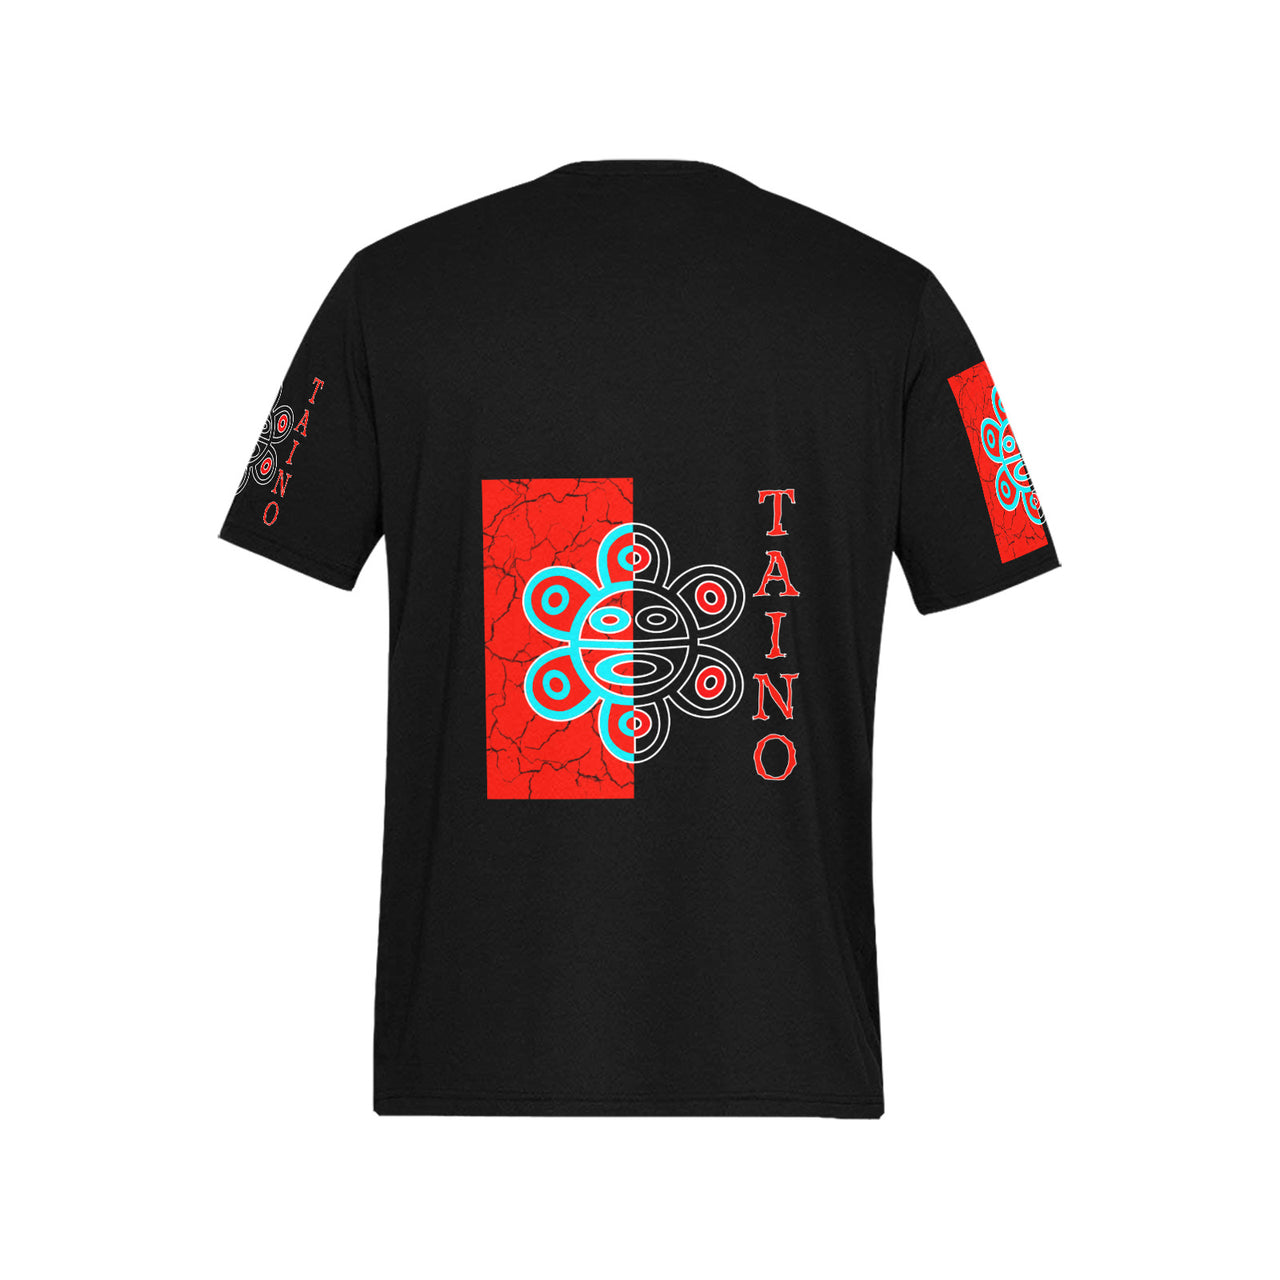 Taino Sol - Men's All Over Print T-shirt